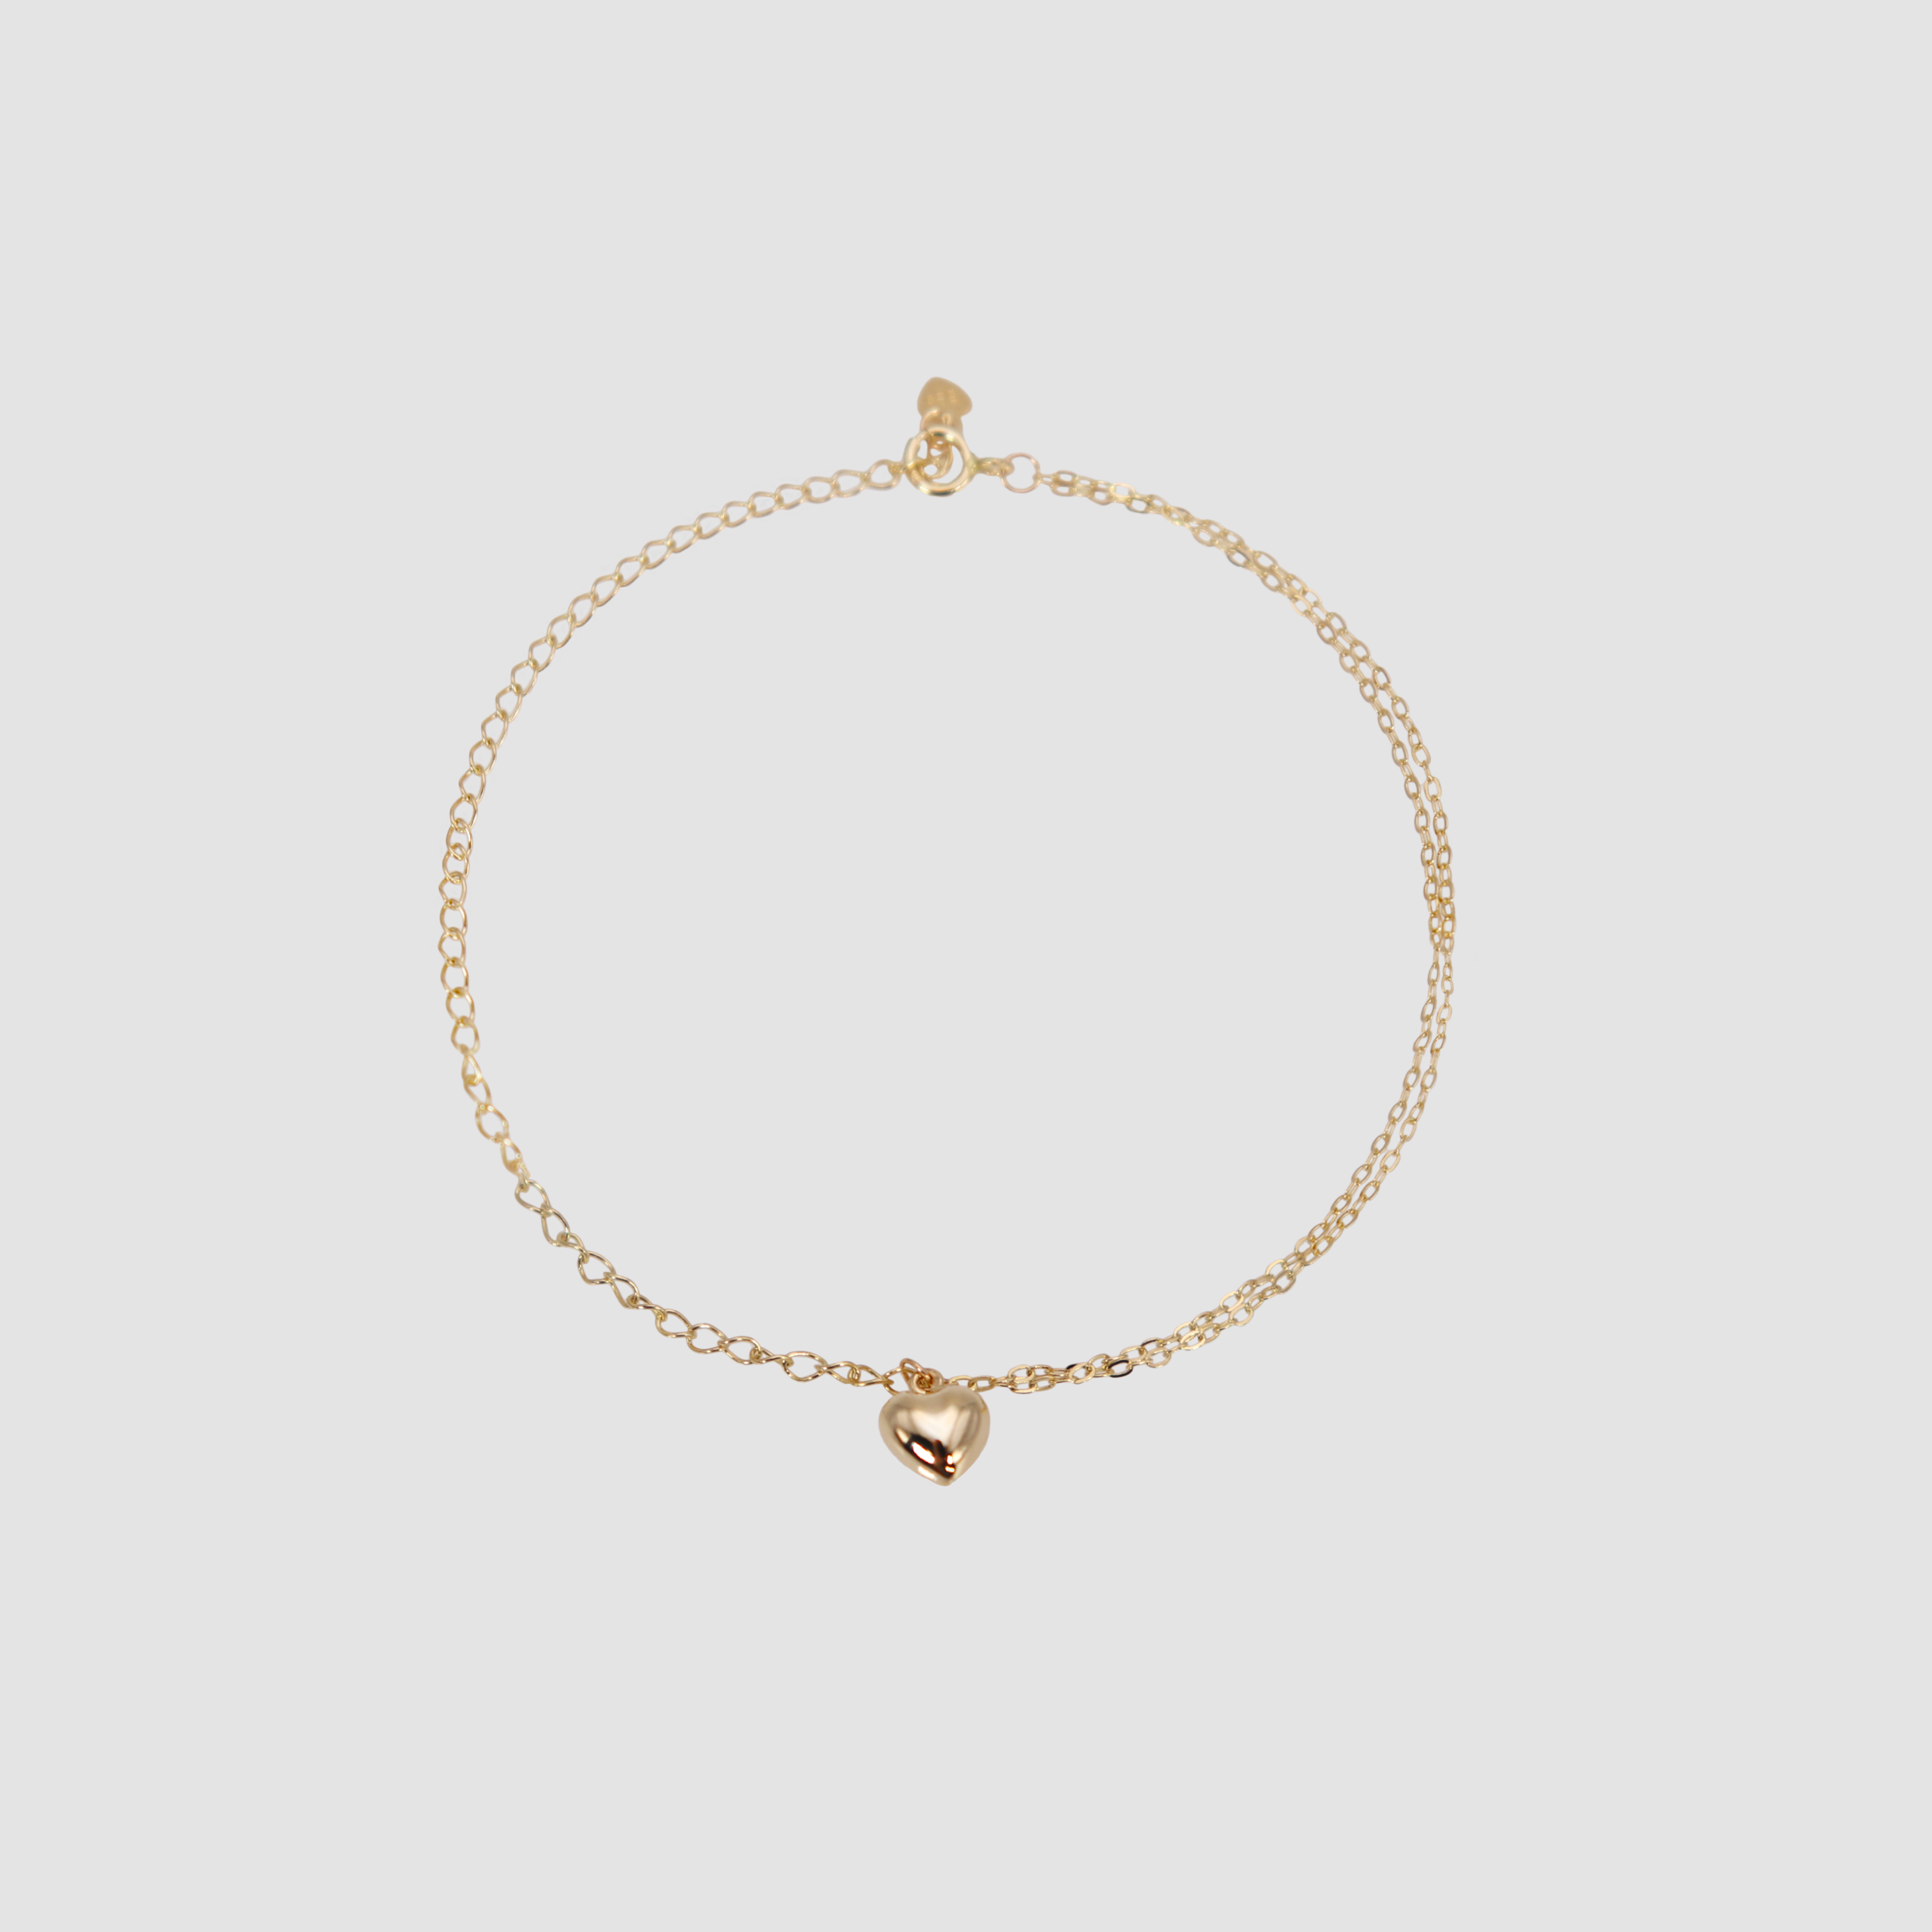 14k gold heart charm bracelet BlackSugar -Best Online Jewelry Shop Earrings, Necklaces, Rings, Located West Los Angeles 